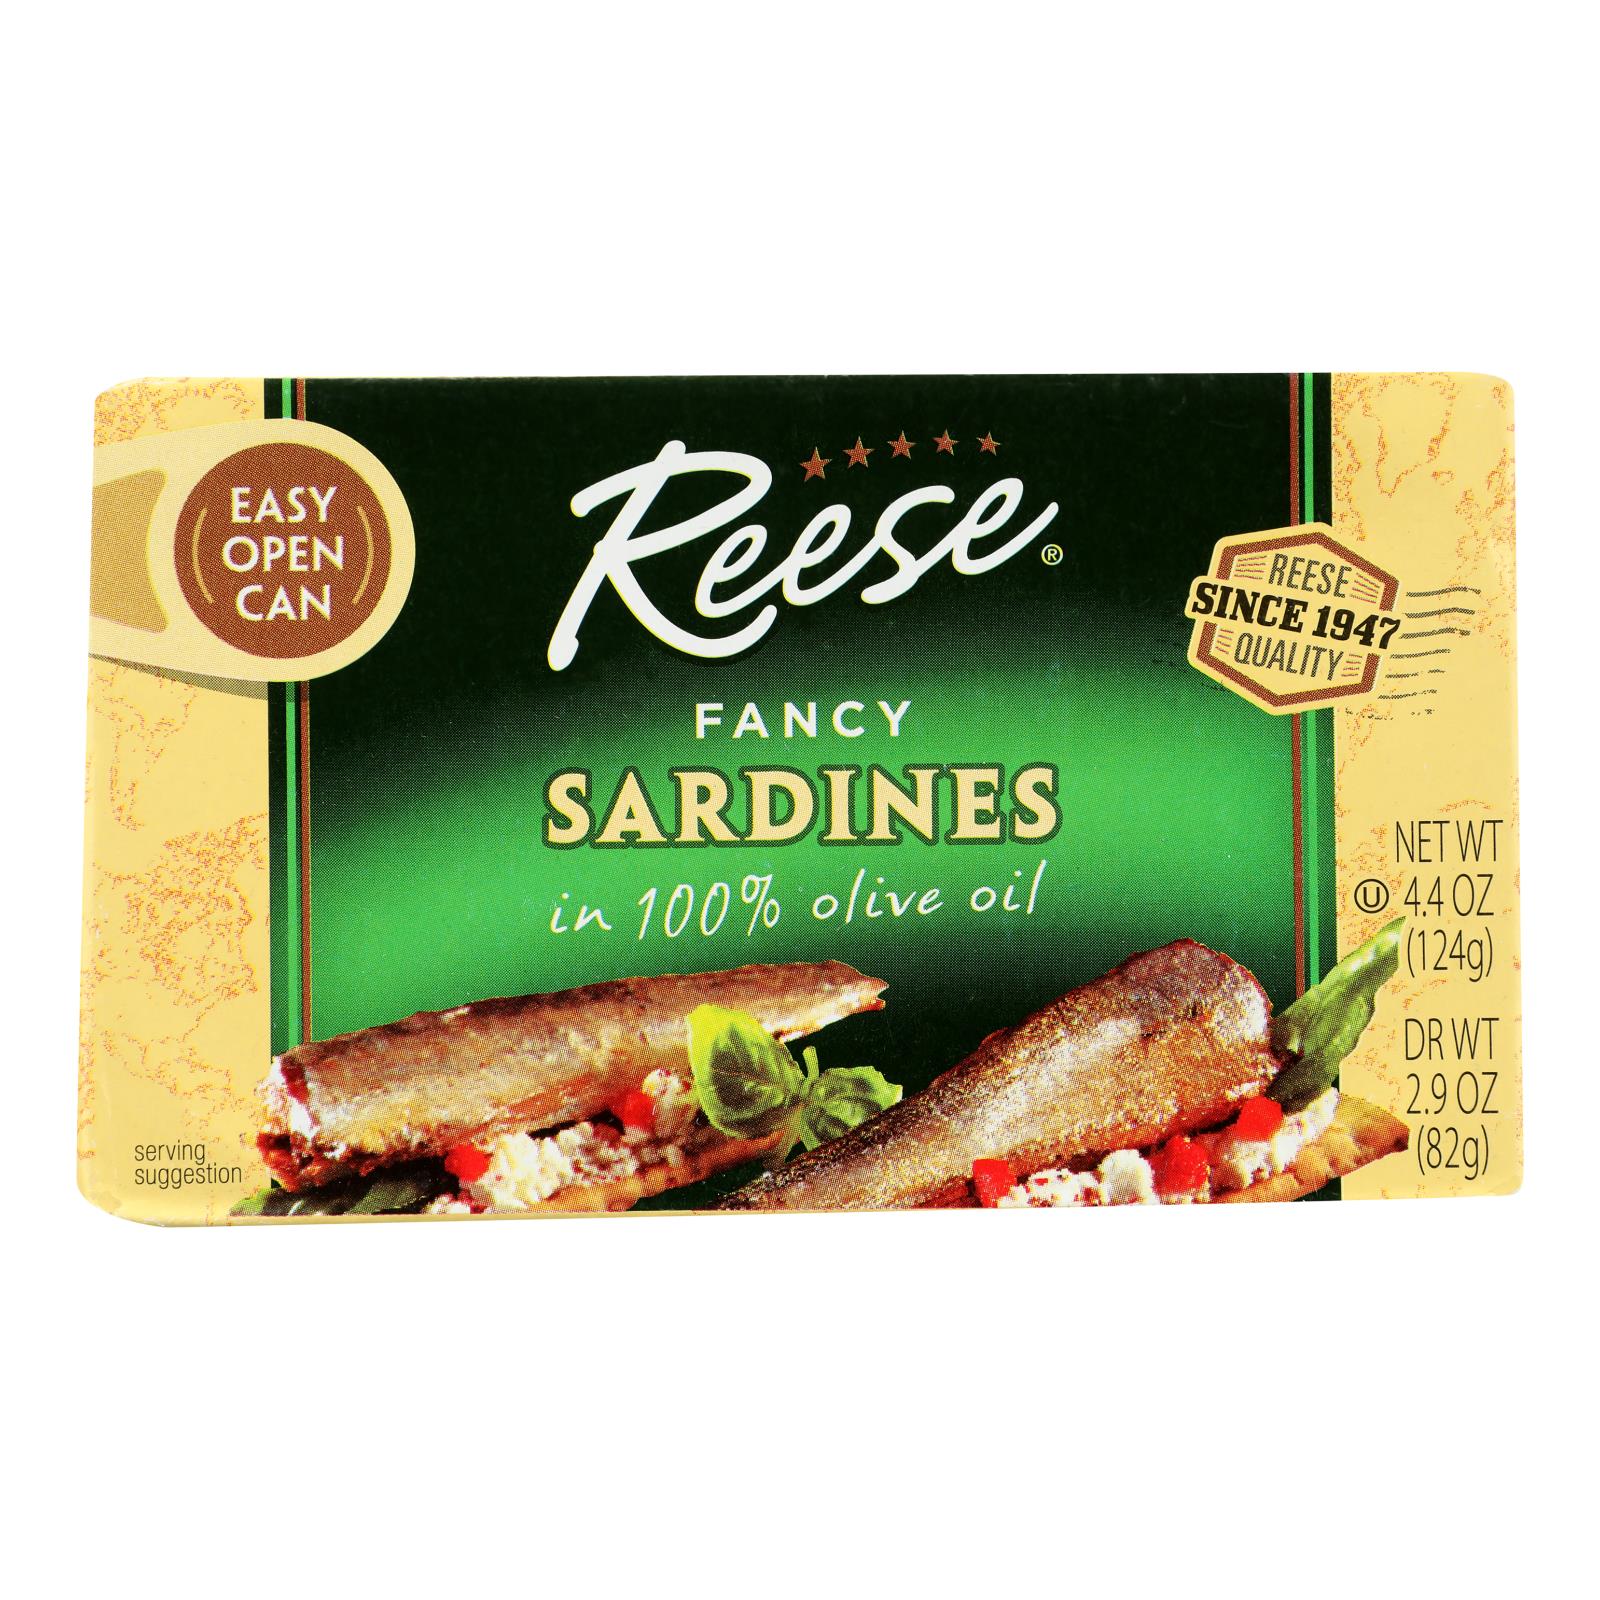 Reese's Fancy Sardines  - Case Of 10 - 4.37 Oz